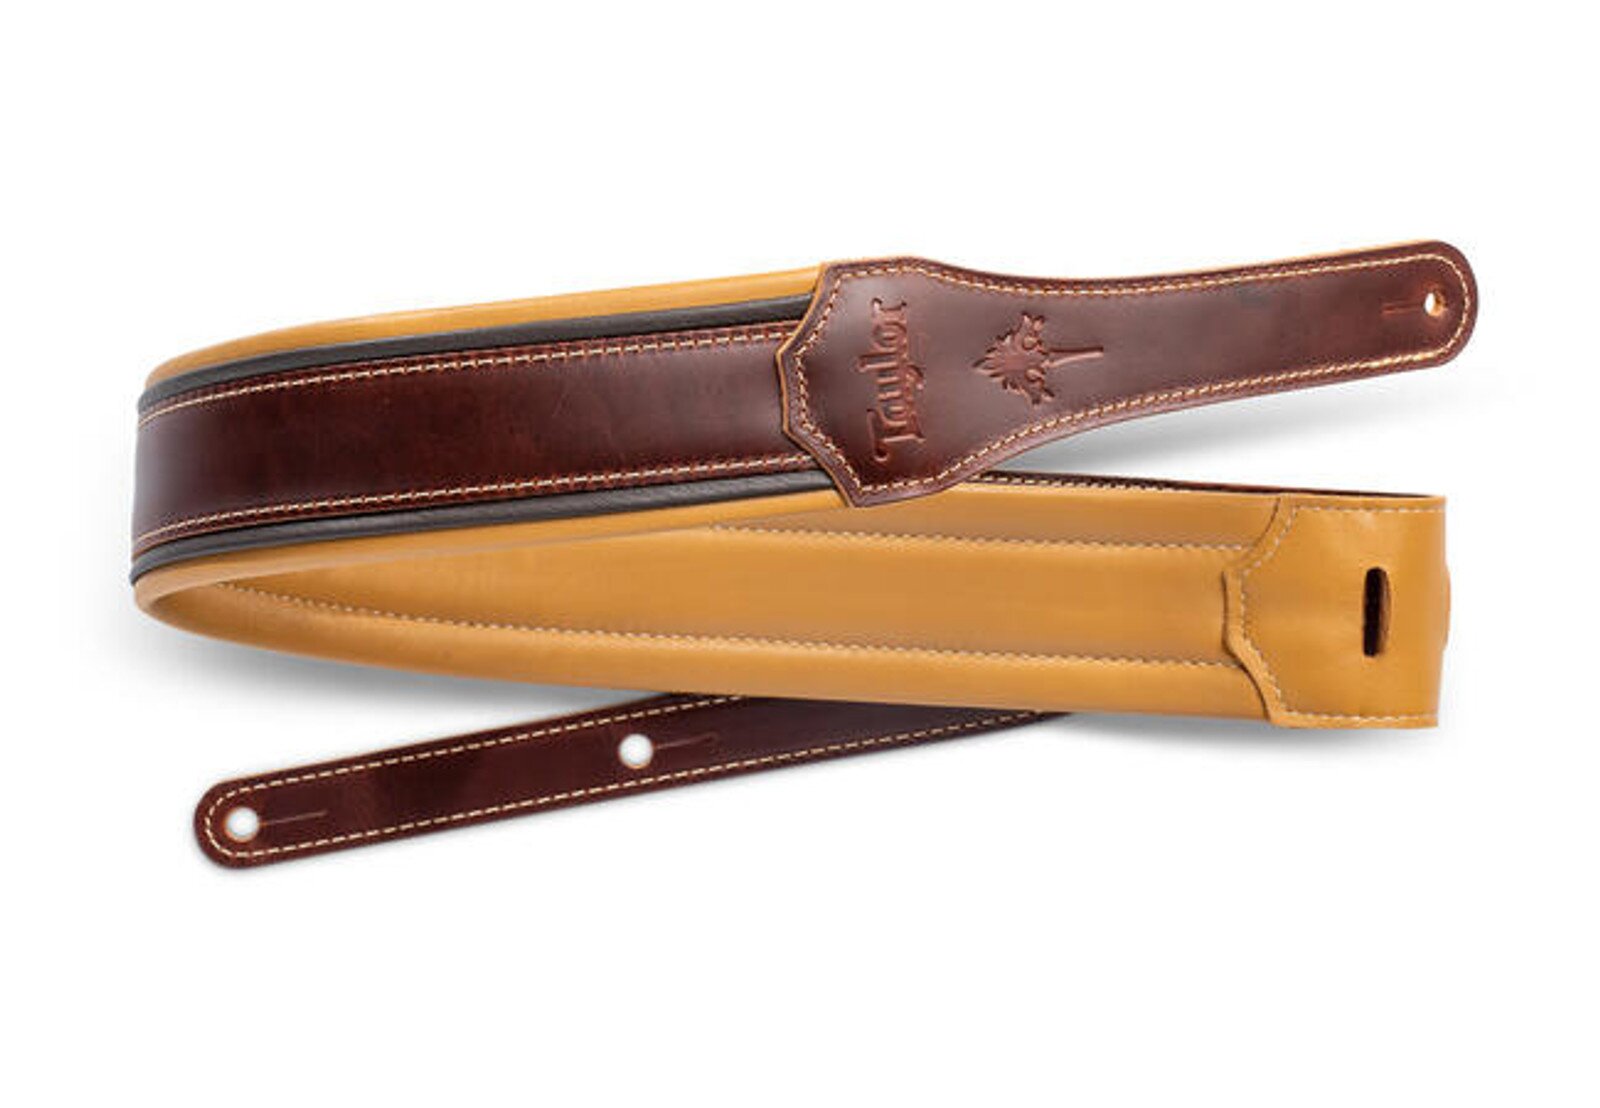 Taylor Ascension Strap, Cordovan Leather, 2.5 